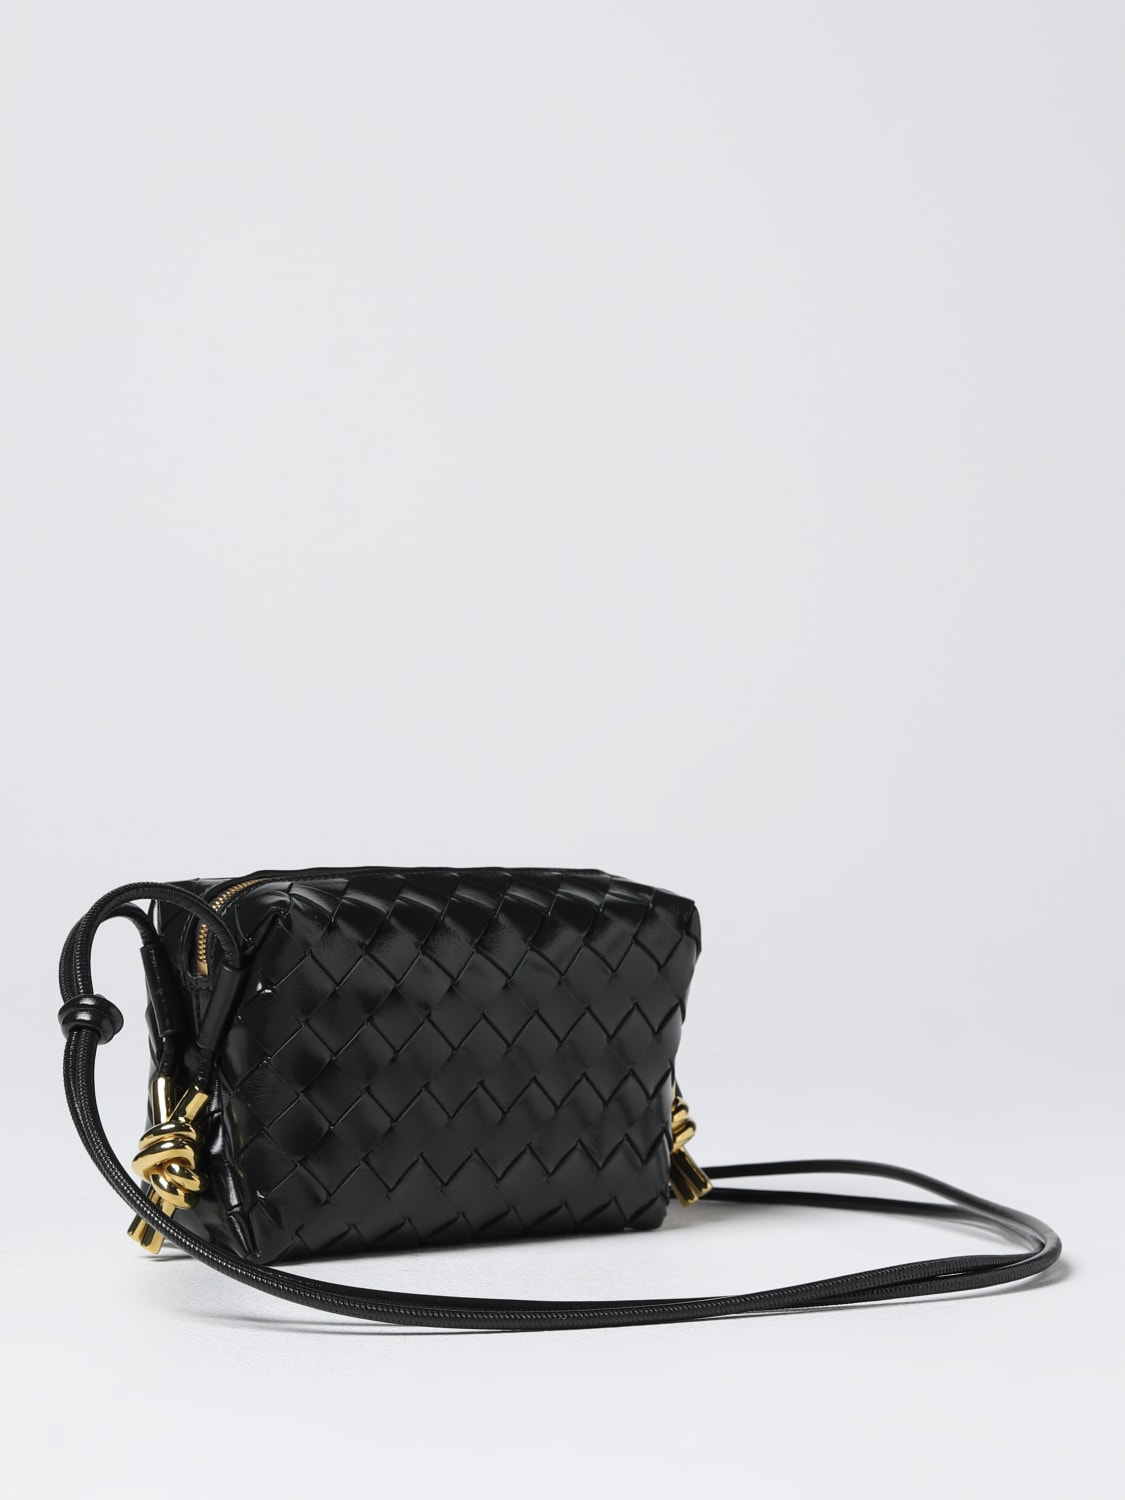 Loop leather handbag Bottega Veneta Green in Leather - 32760291